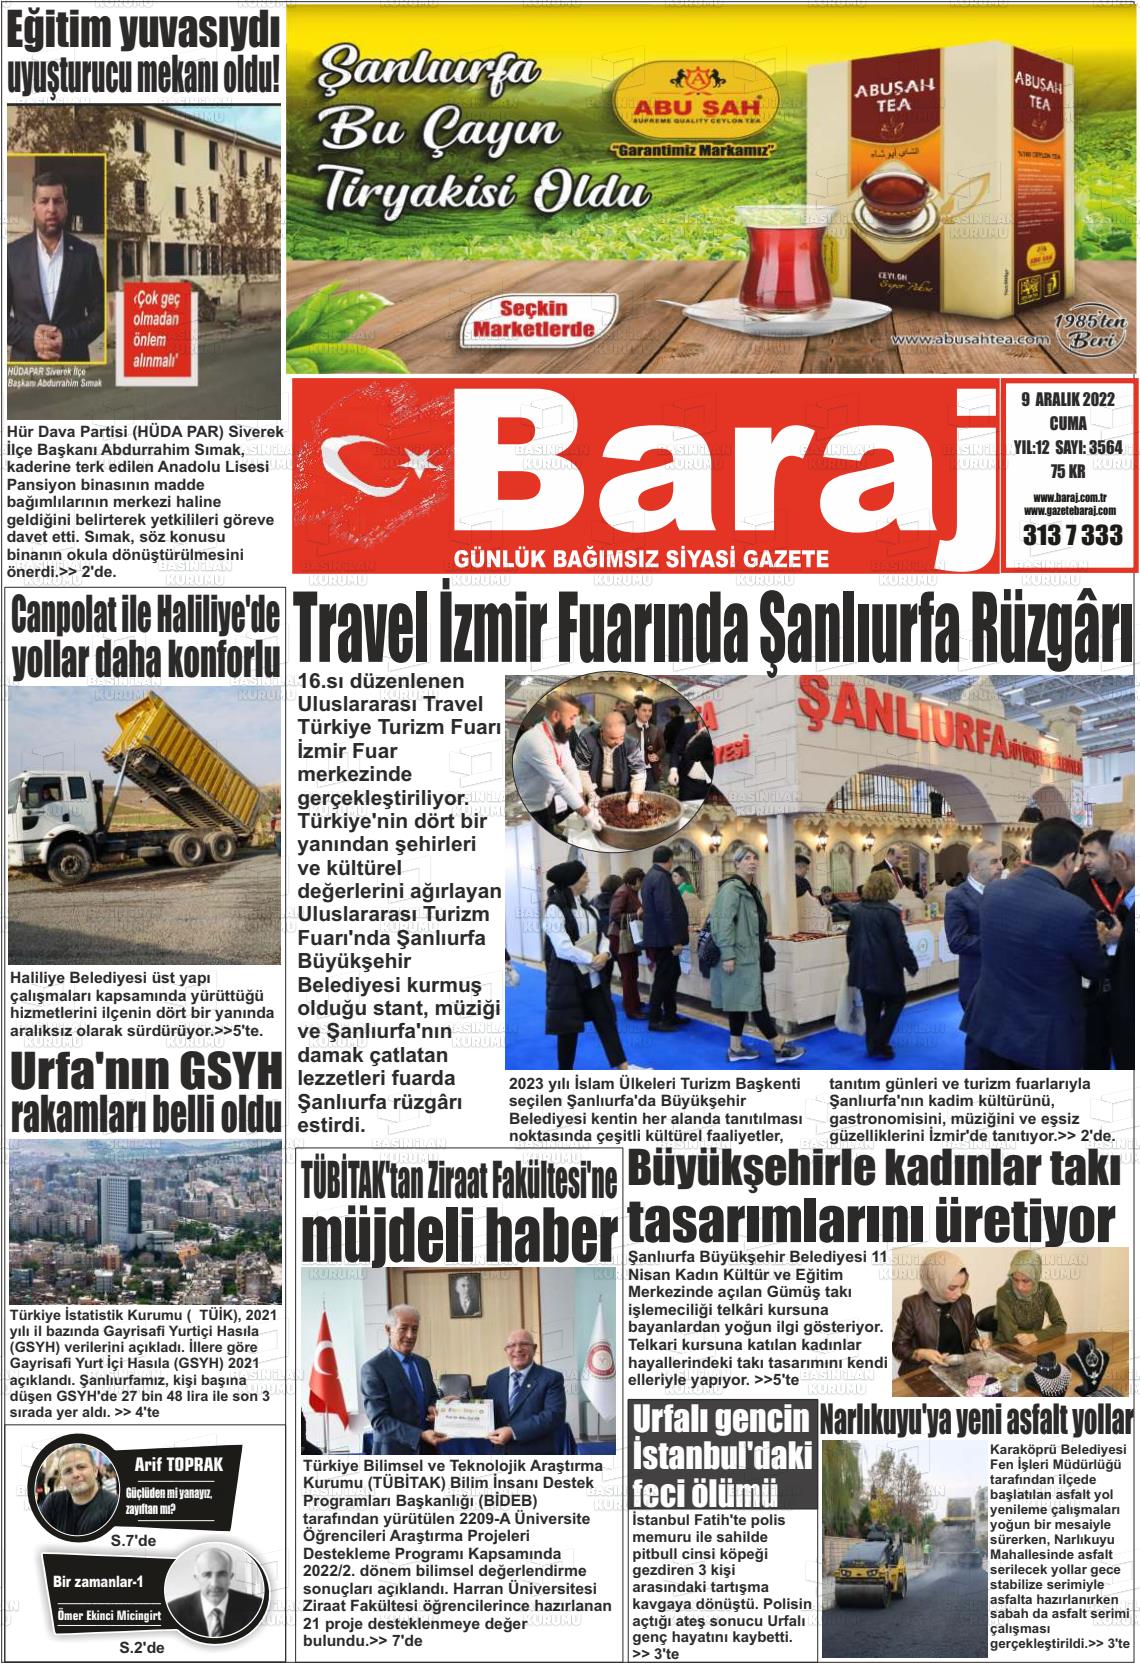 09 Aralık 2022 Baraj Gazete Manşeti